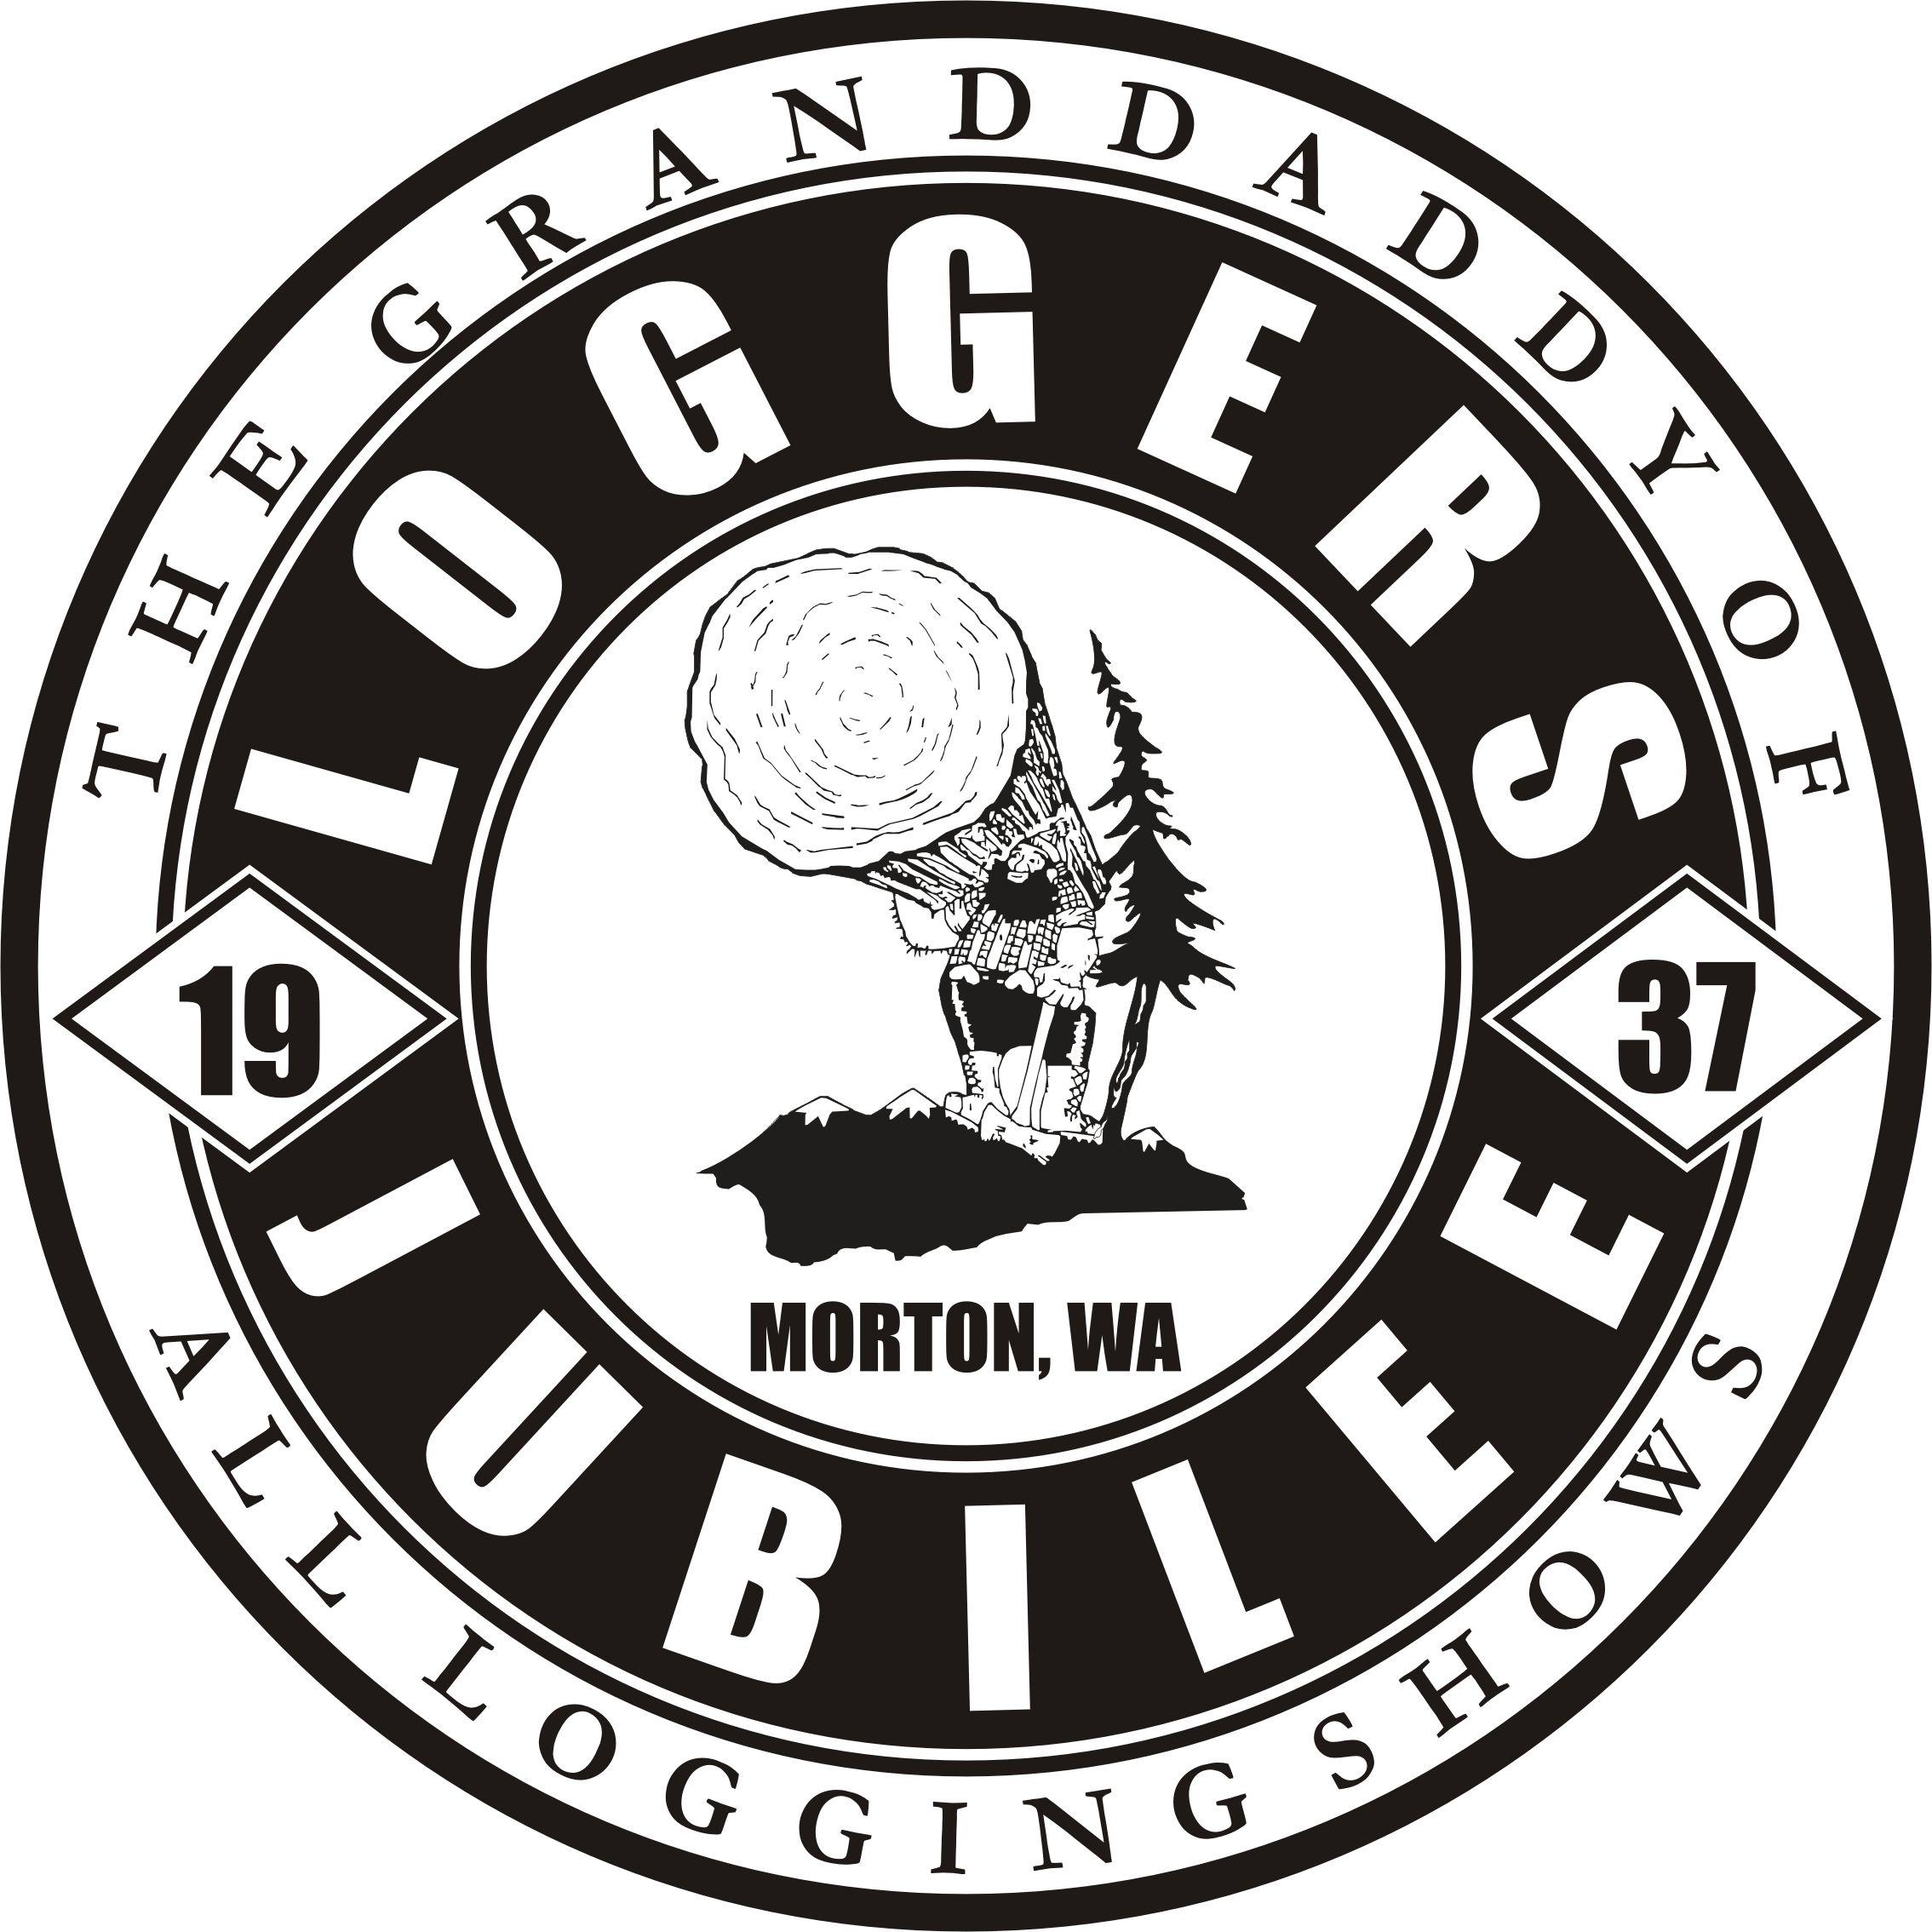 Loggers Logo - Morton Loggers Jubilee - The Granddaddy of all Logging Shows